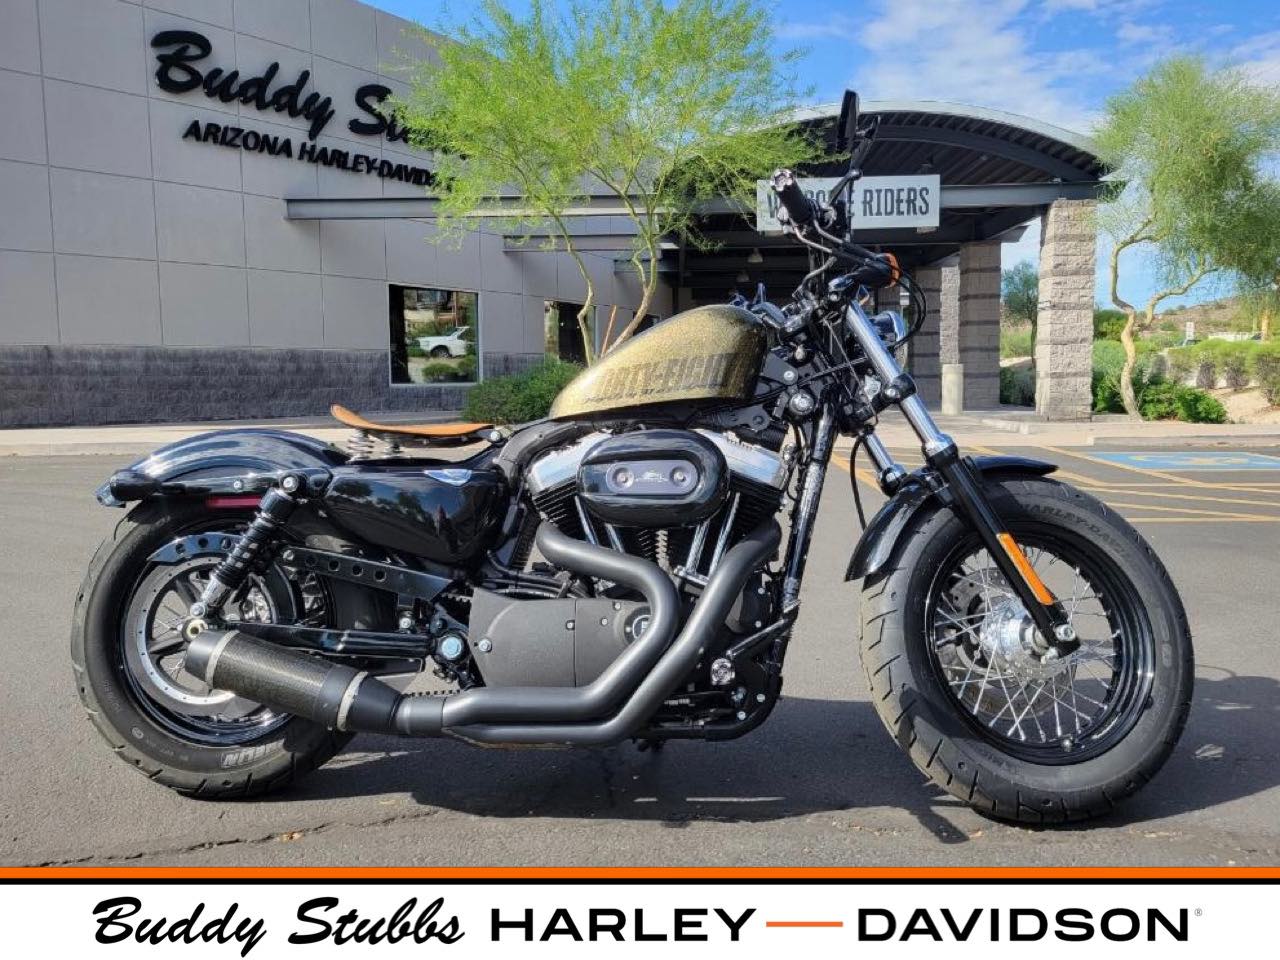 2013 Harley-Davidson Sportster Forty-Eight at Buddy Stubbs Arizona Harley-Davidson